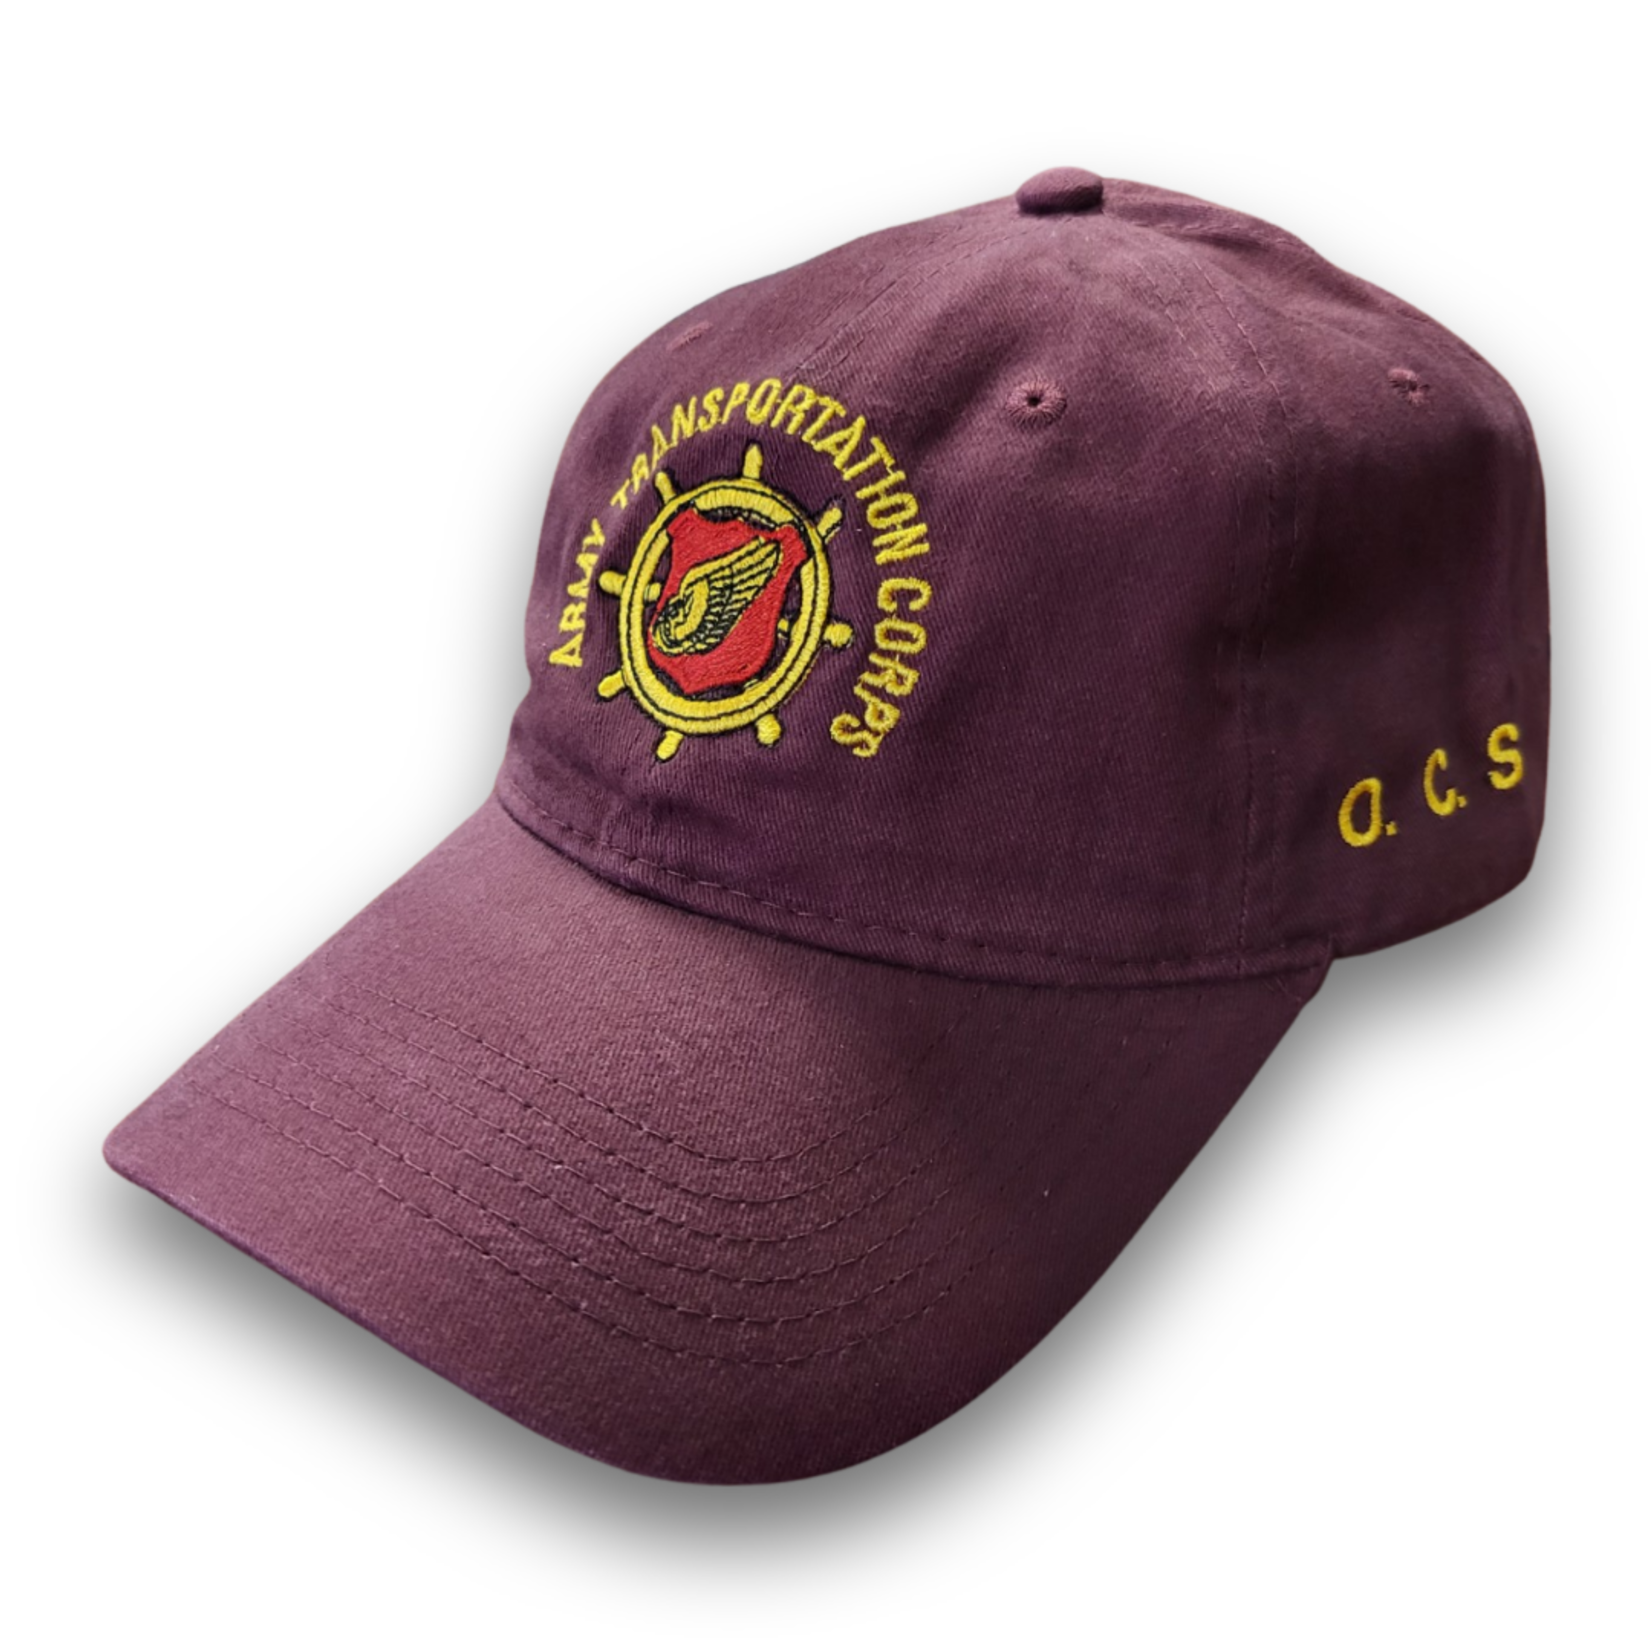 O.C.S Army Transportation Corp Cap